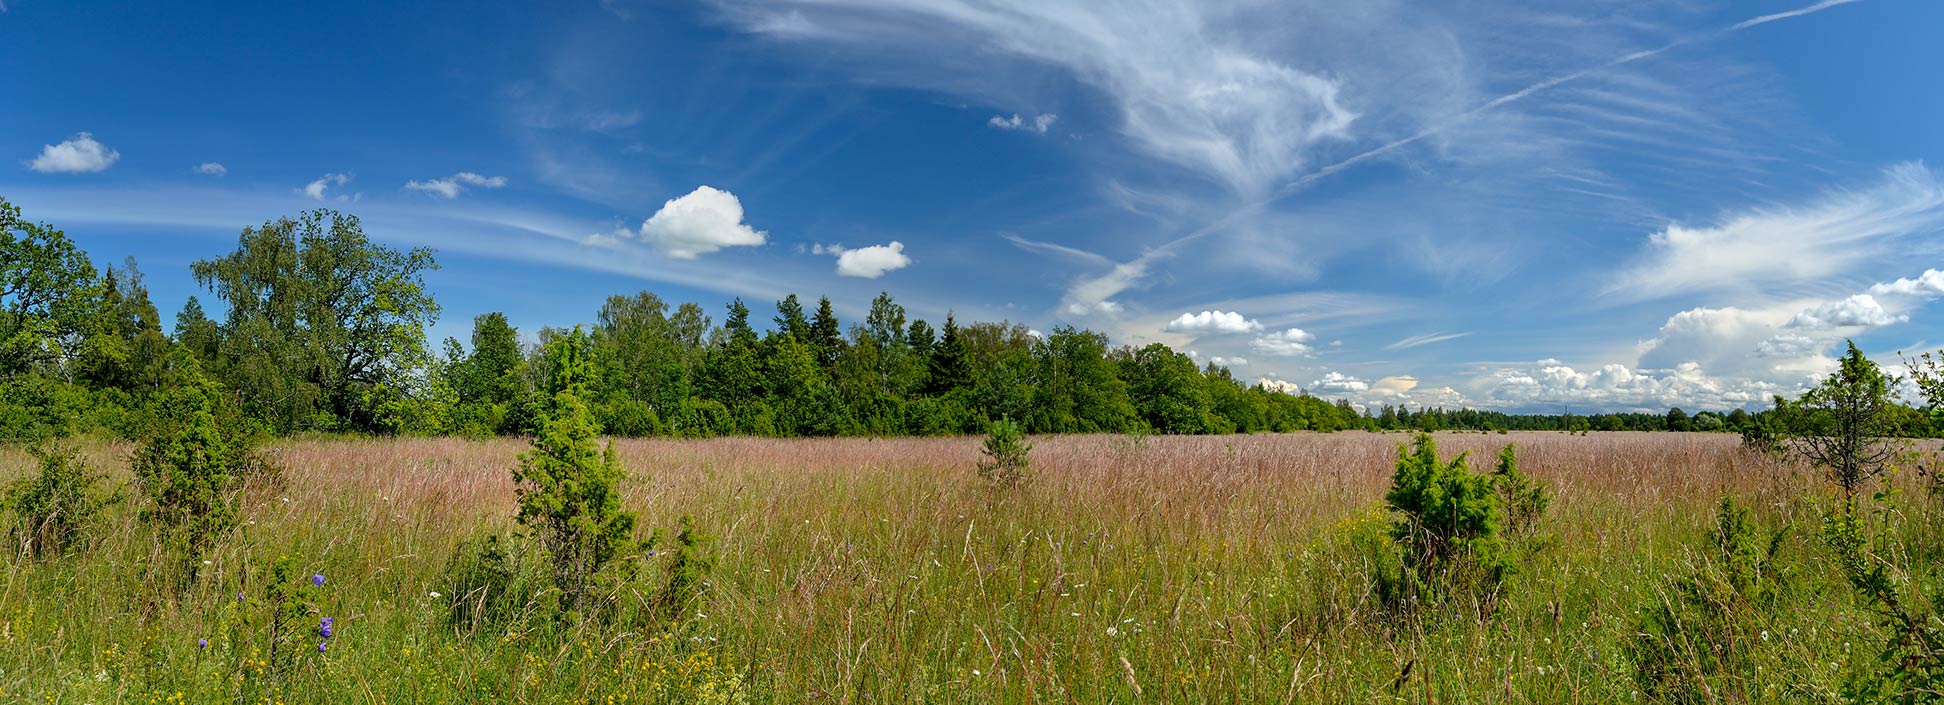 Alvar Landscape near Keila in Harju County of Estonia